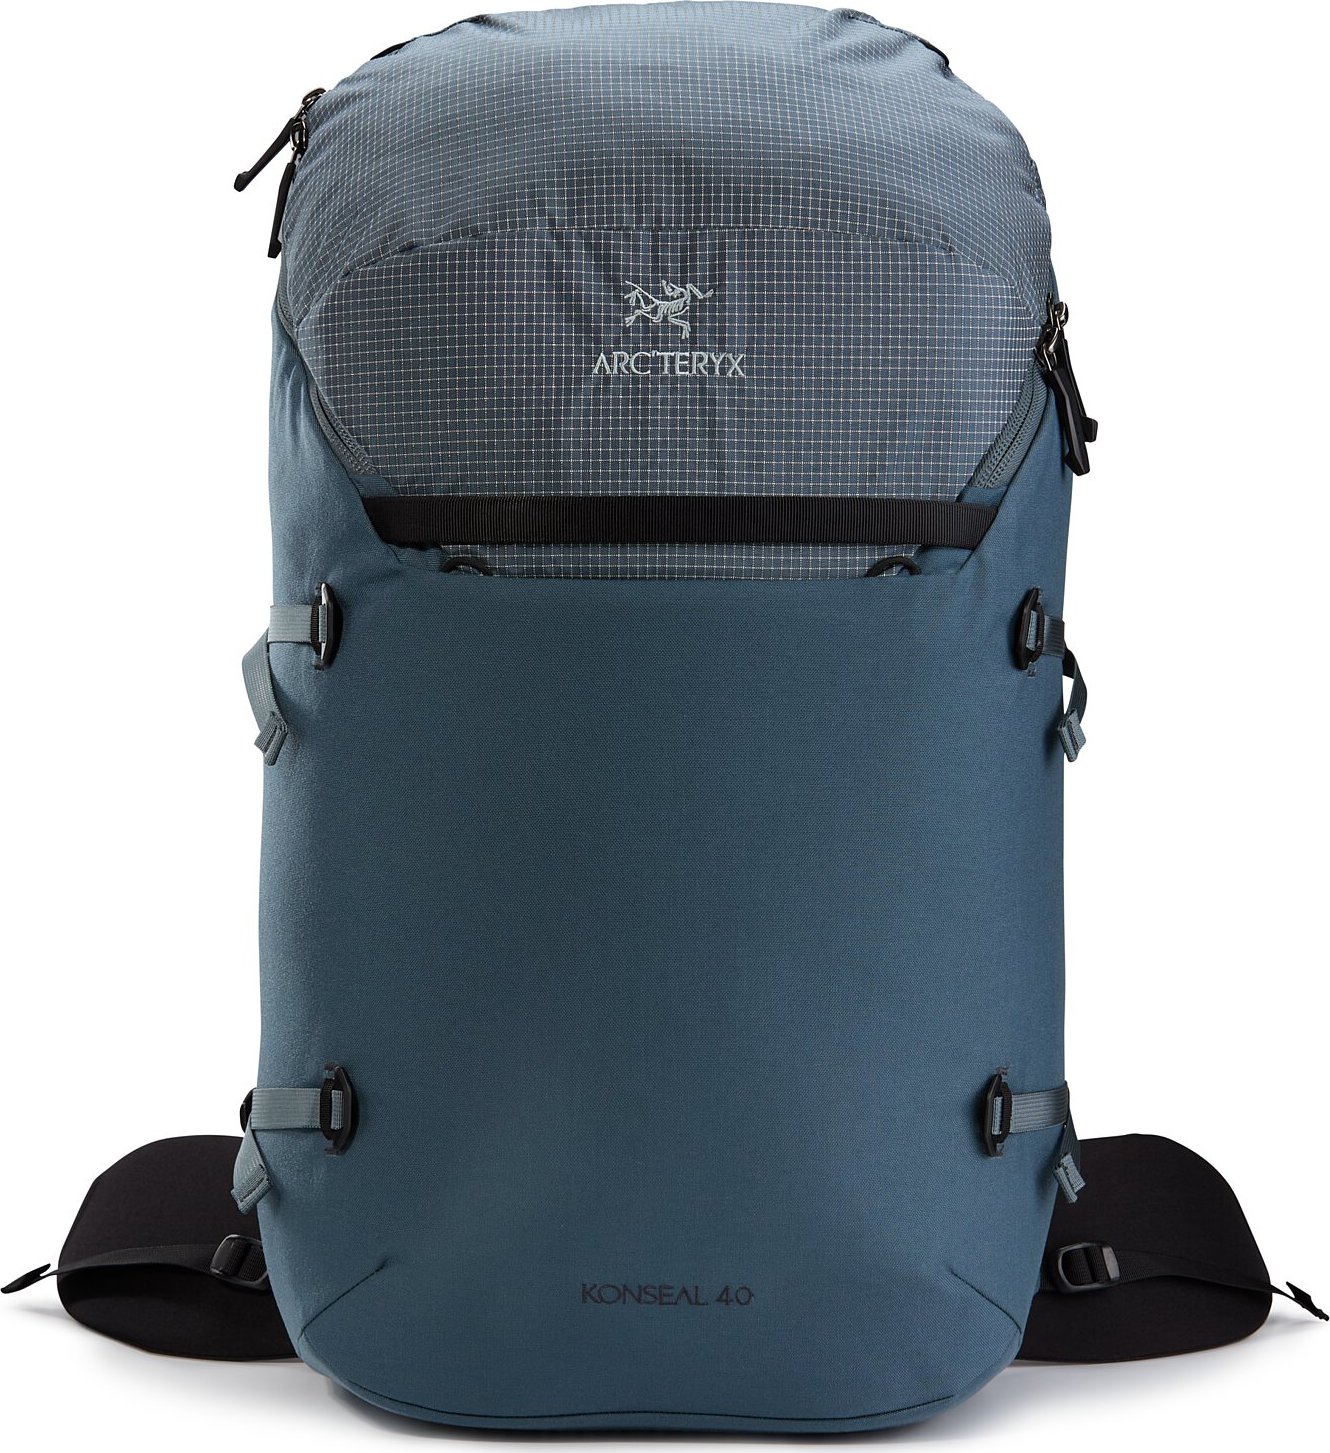 Arcteryx Konseal 40L Backpack Neptune